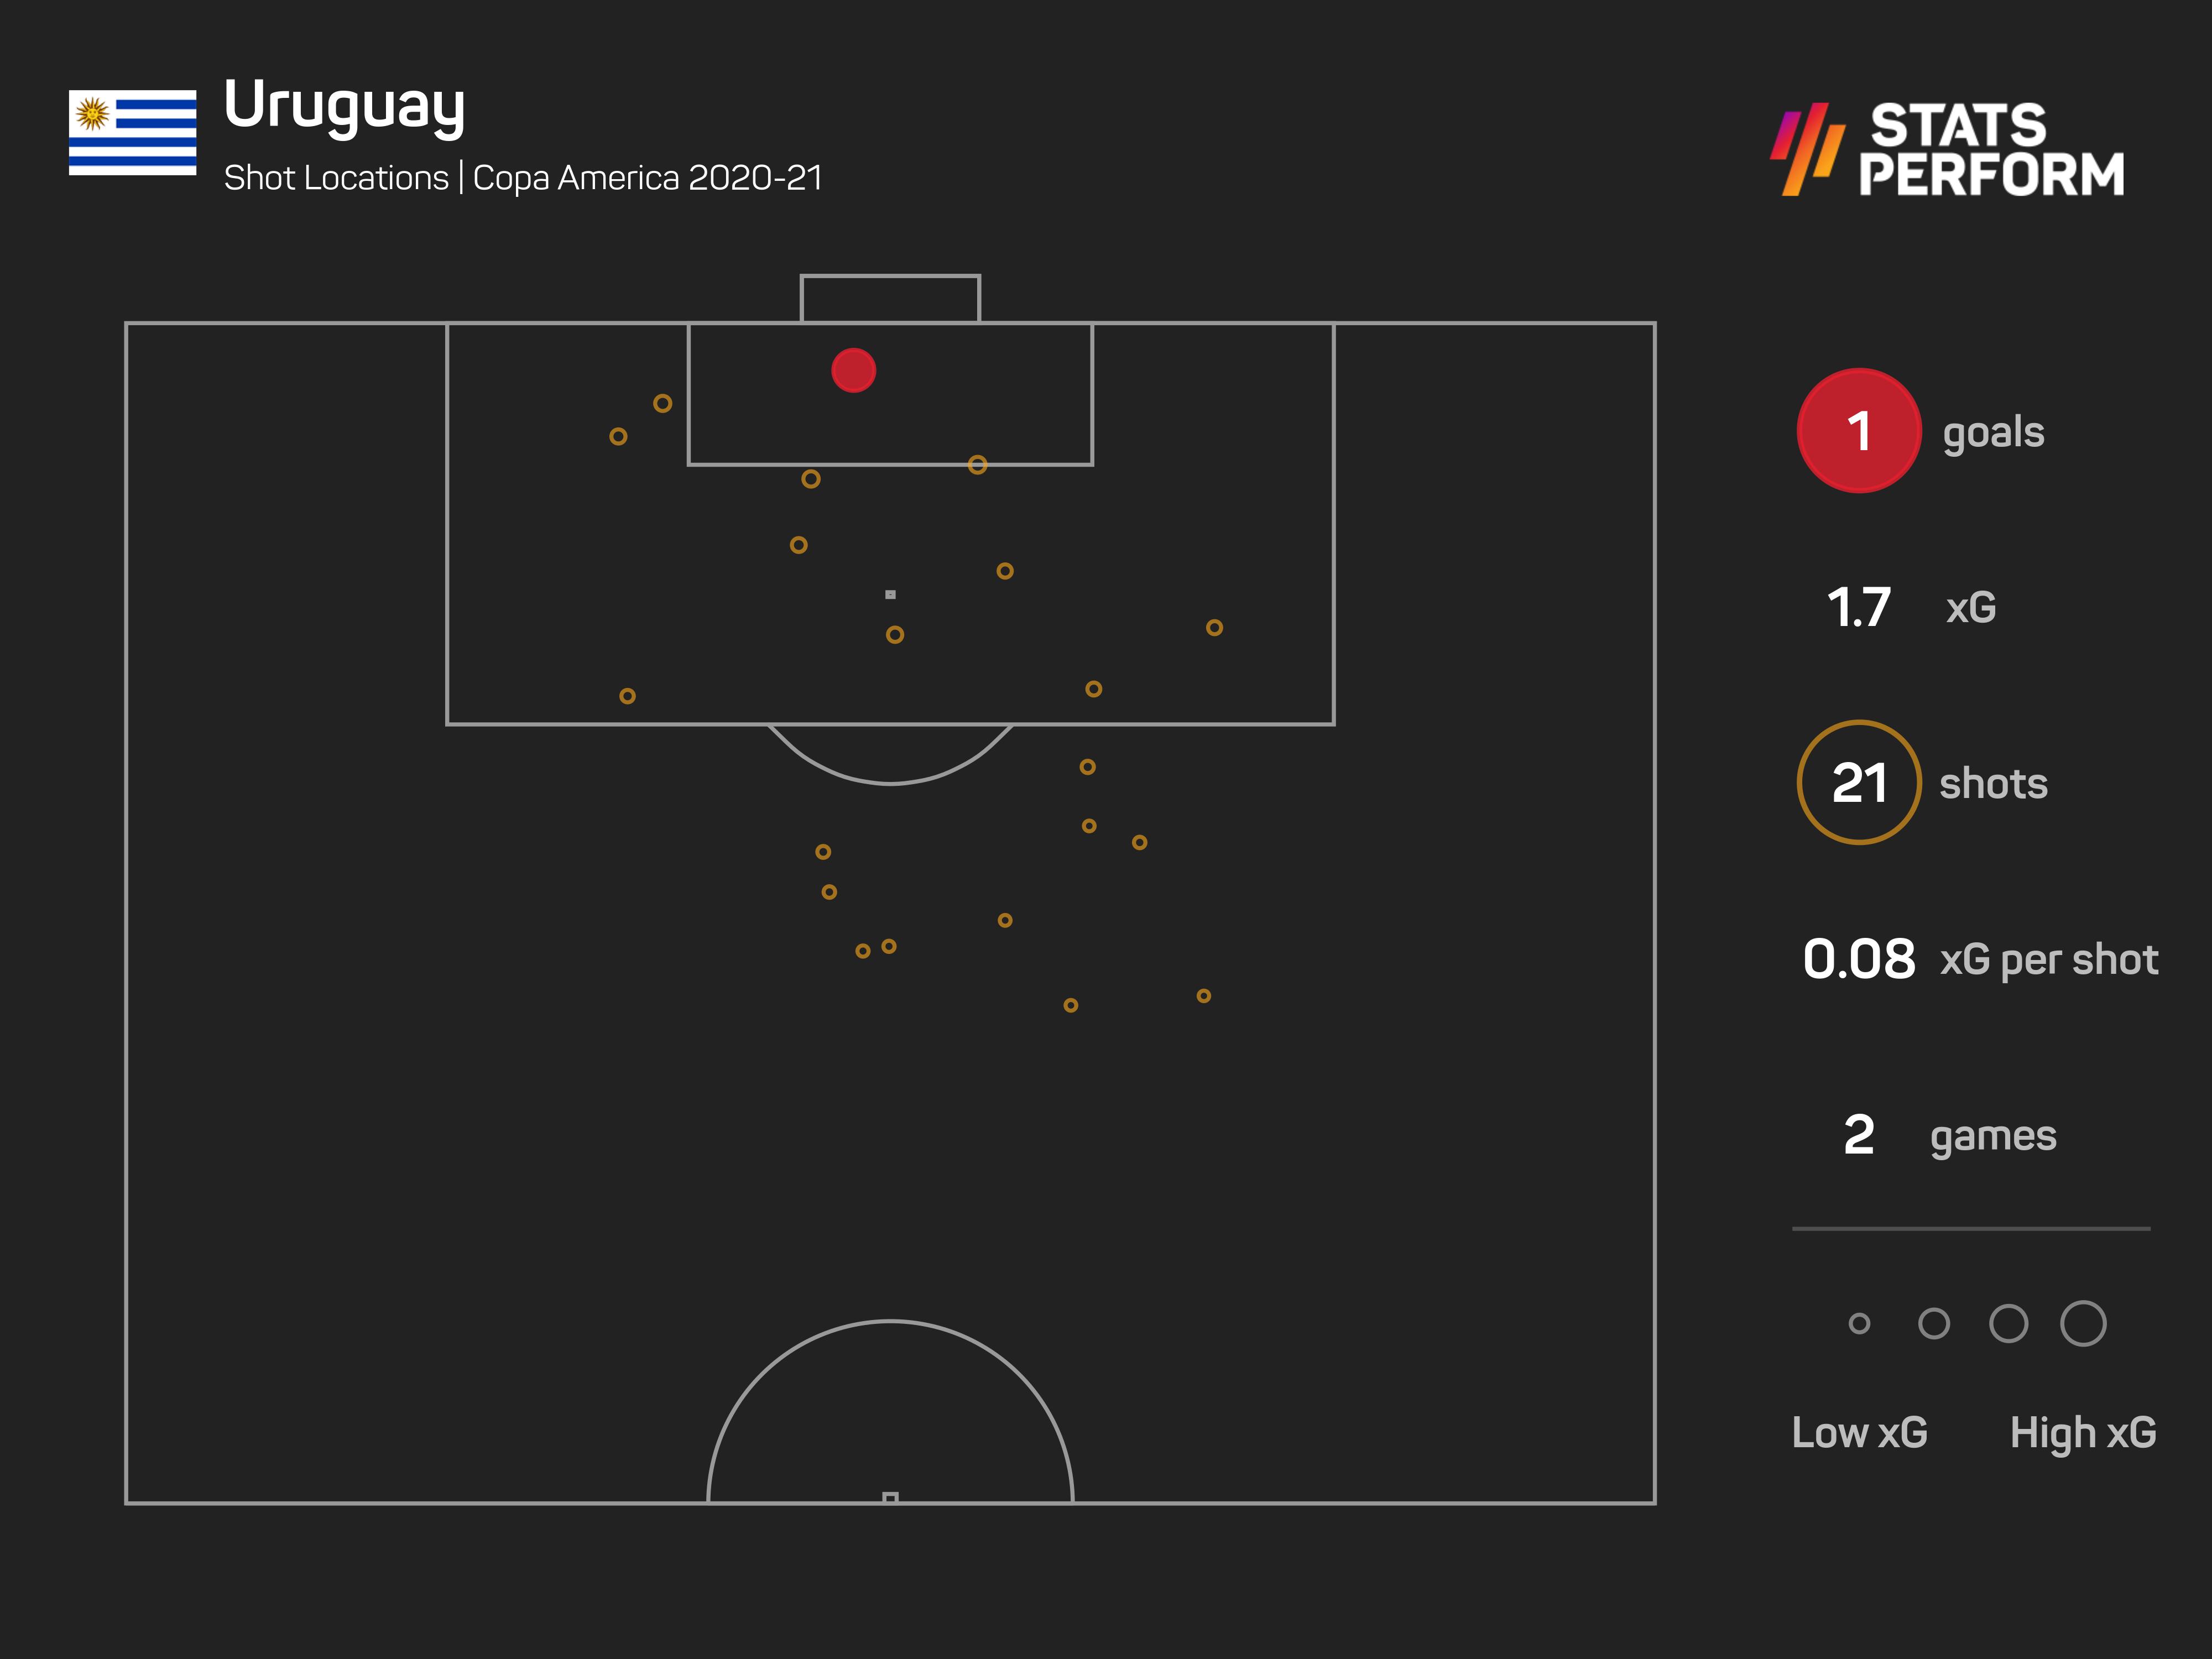 Uruguay shots at the Copa America